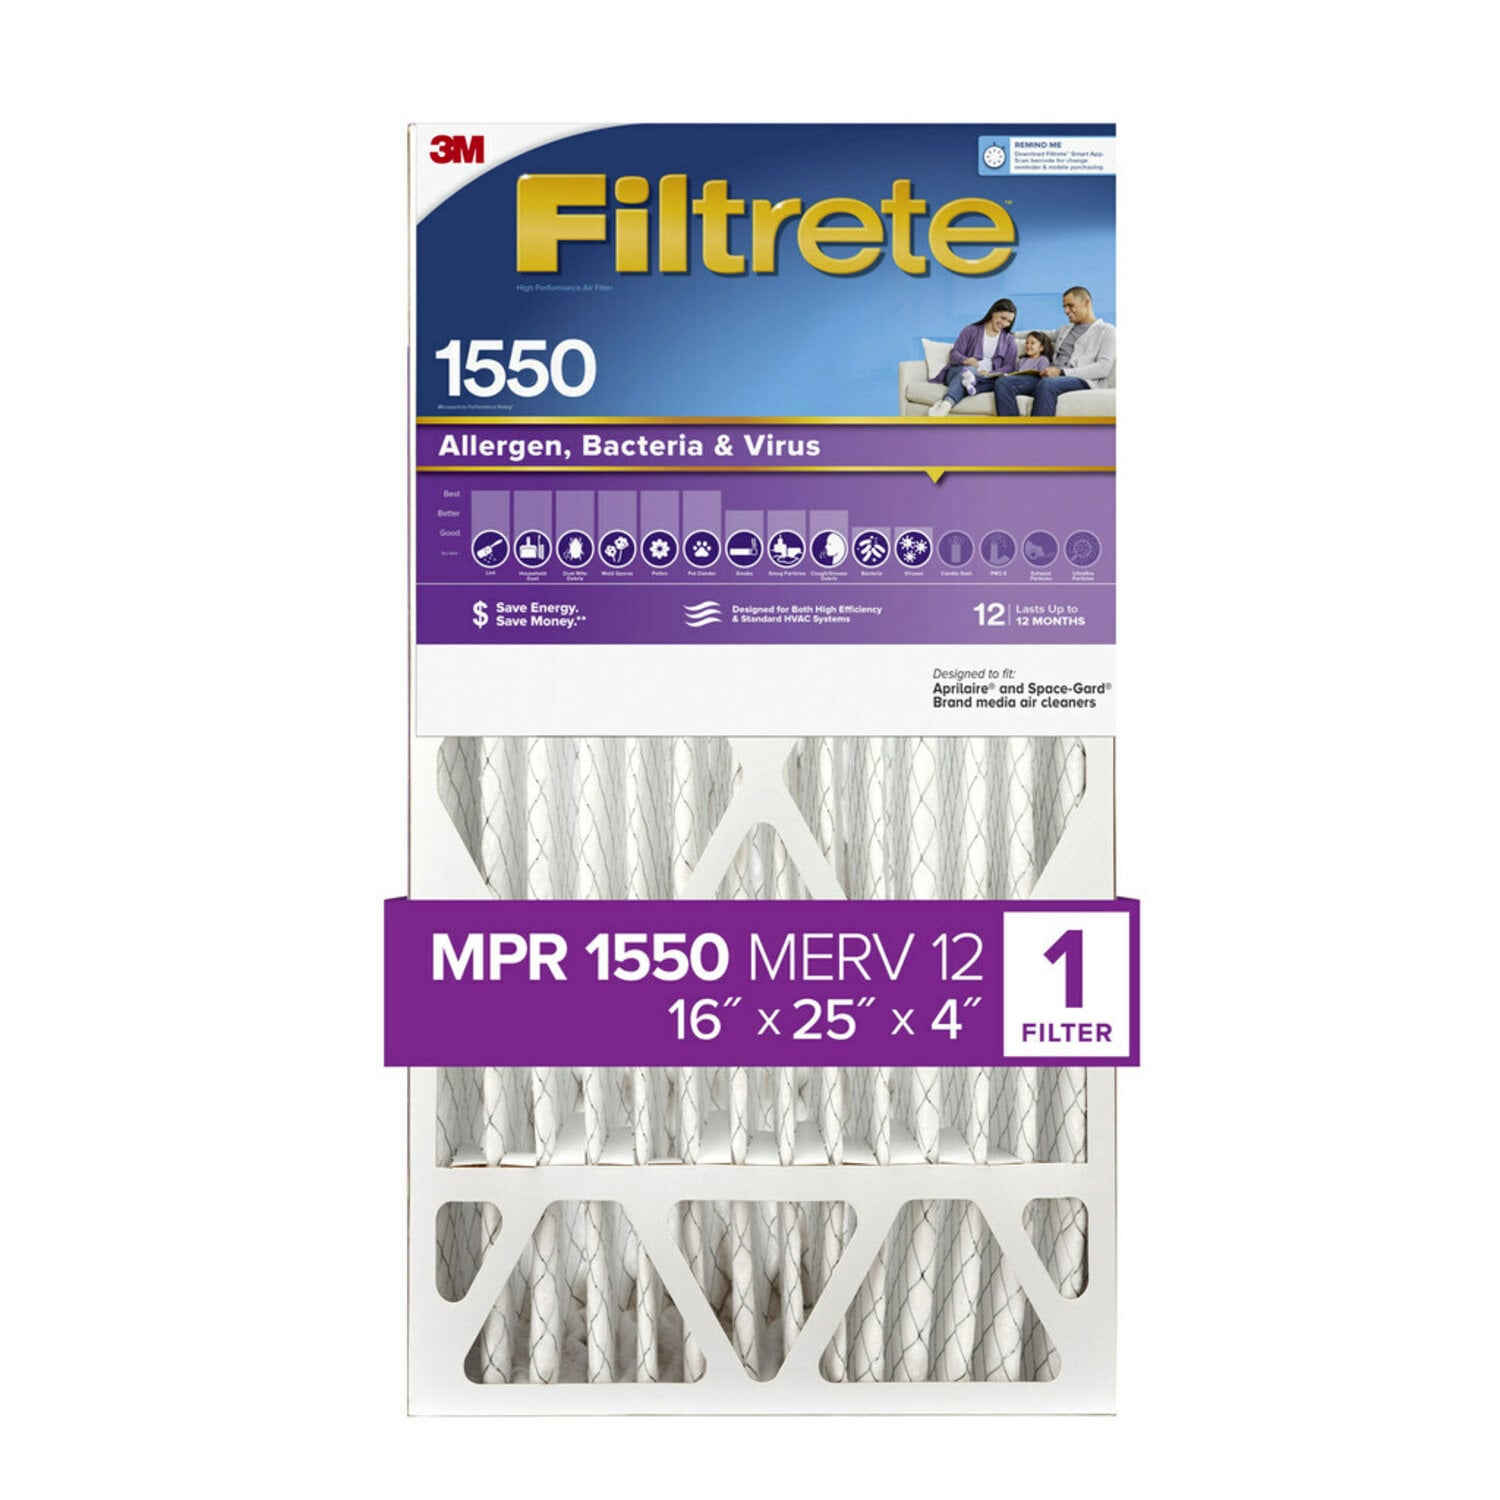 7100097248 - Filtrete Ultra Allergen Reduction Deep Pleat Filter NDP01-4IN-4, 16 in x 25 in x 4 in (40.1 cm x 62.2 cm x 10.6 cm)